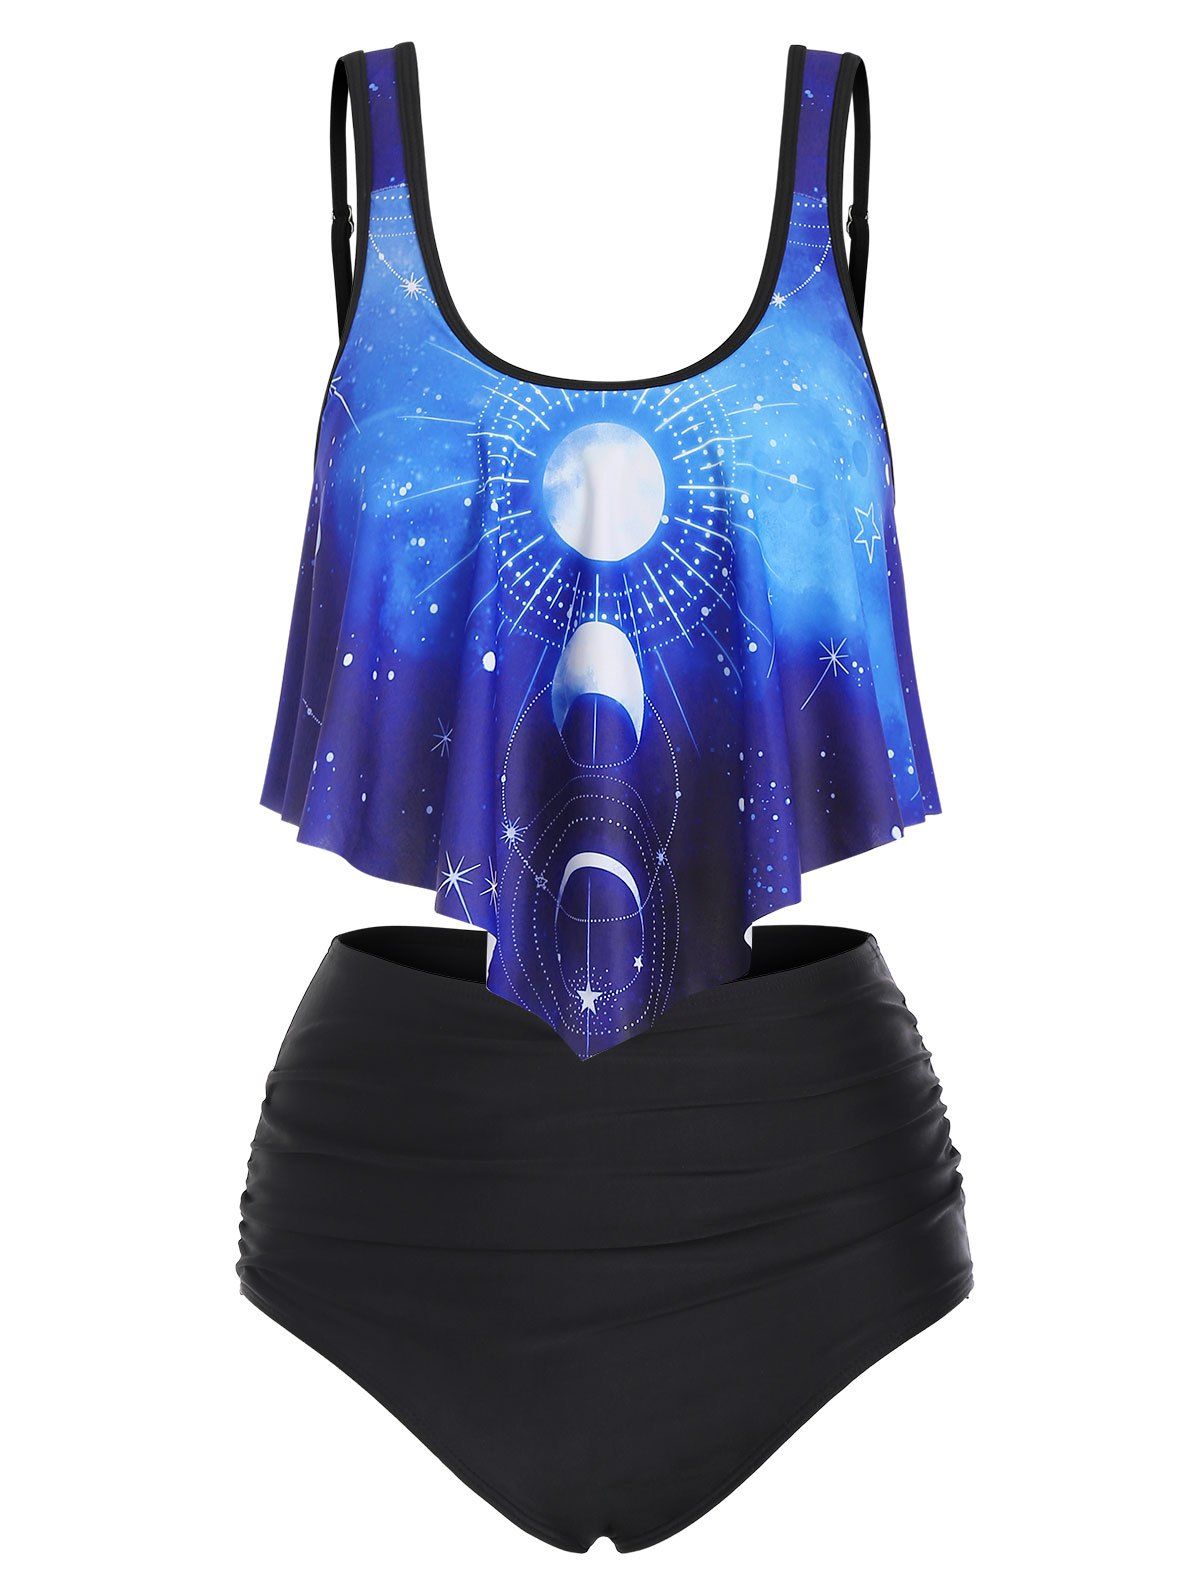 Gothic Swimsuit Galaxy Lunar Eclipse Print Tummy Control Tankini Swimwear - BLUE L